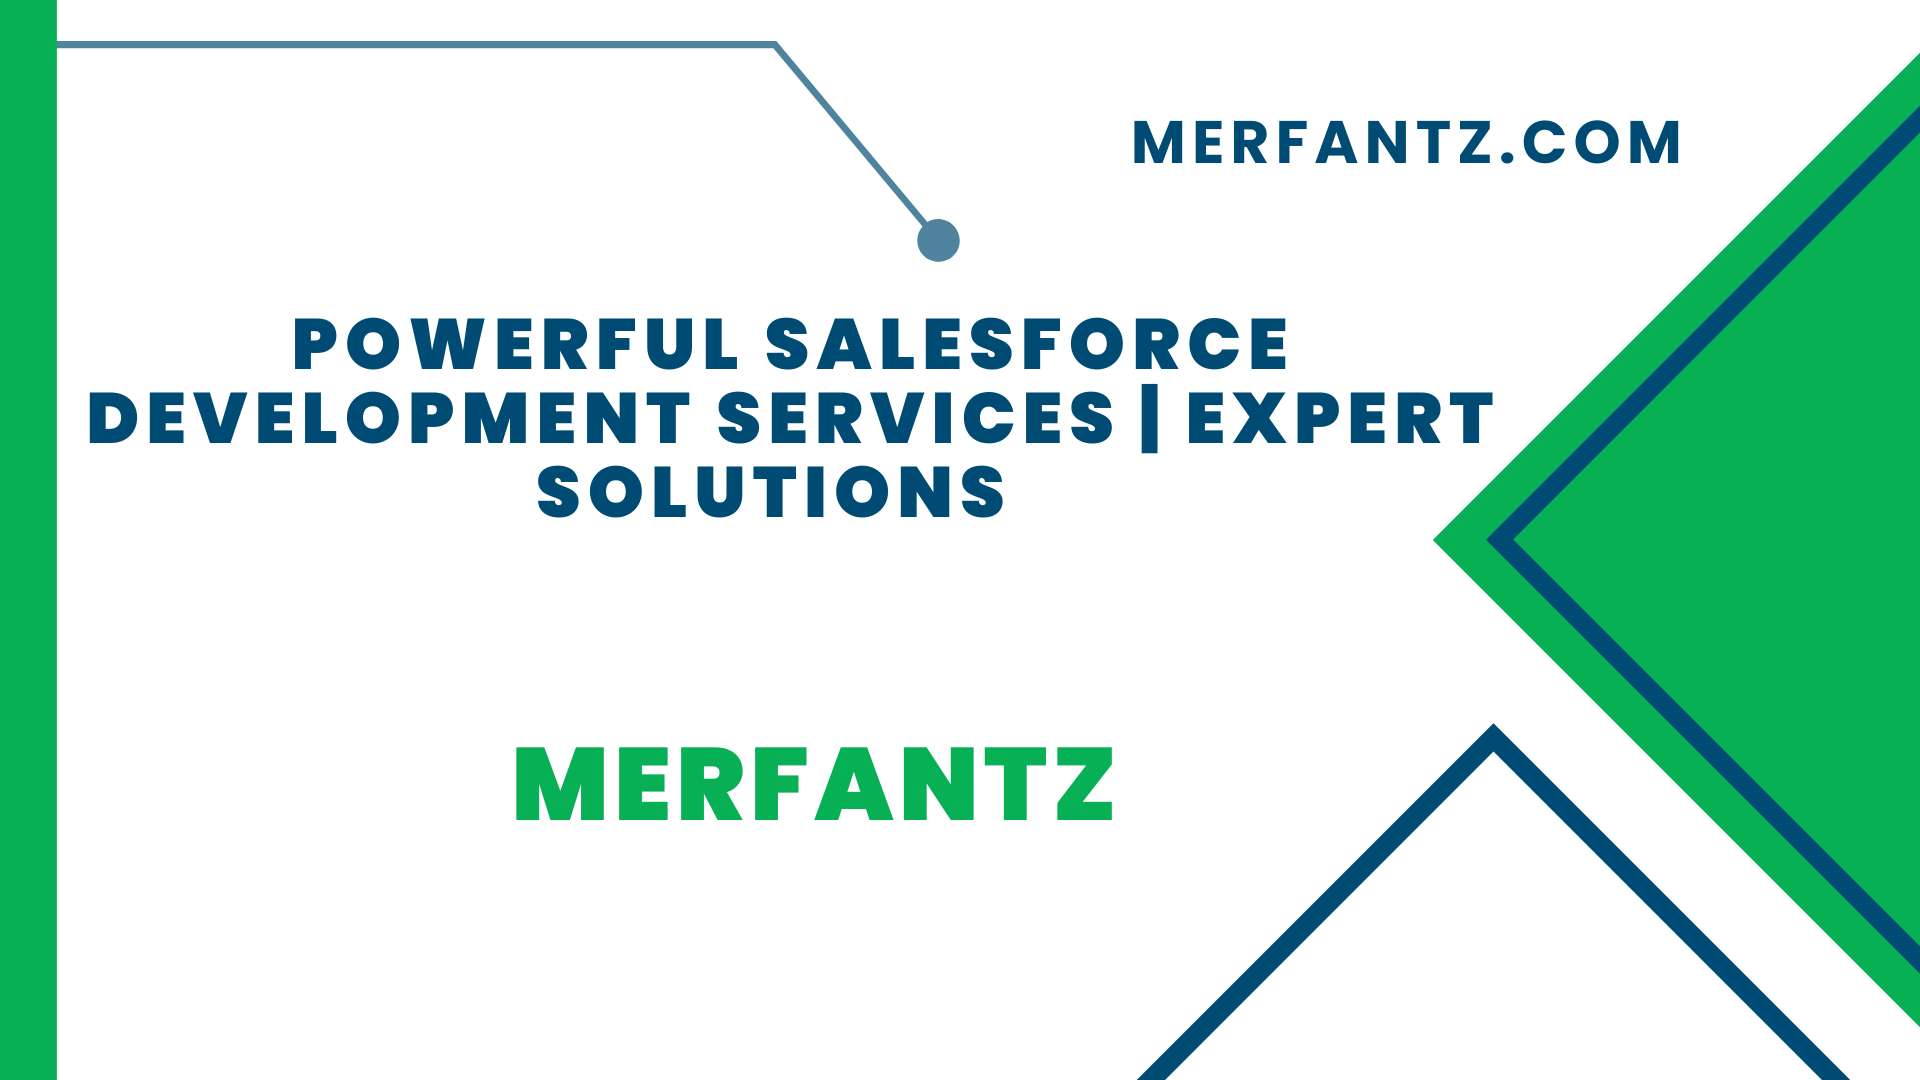 Powerful Salesforce Development Services Expert Solutions by Merfantz